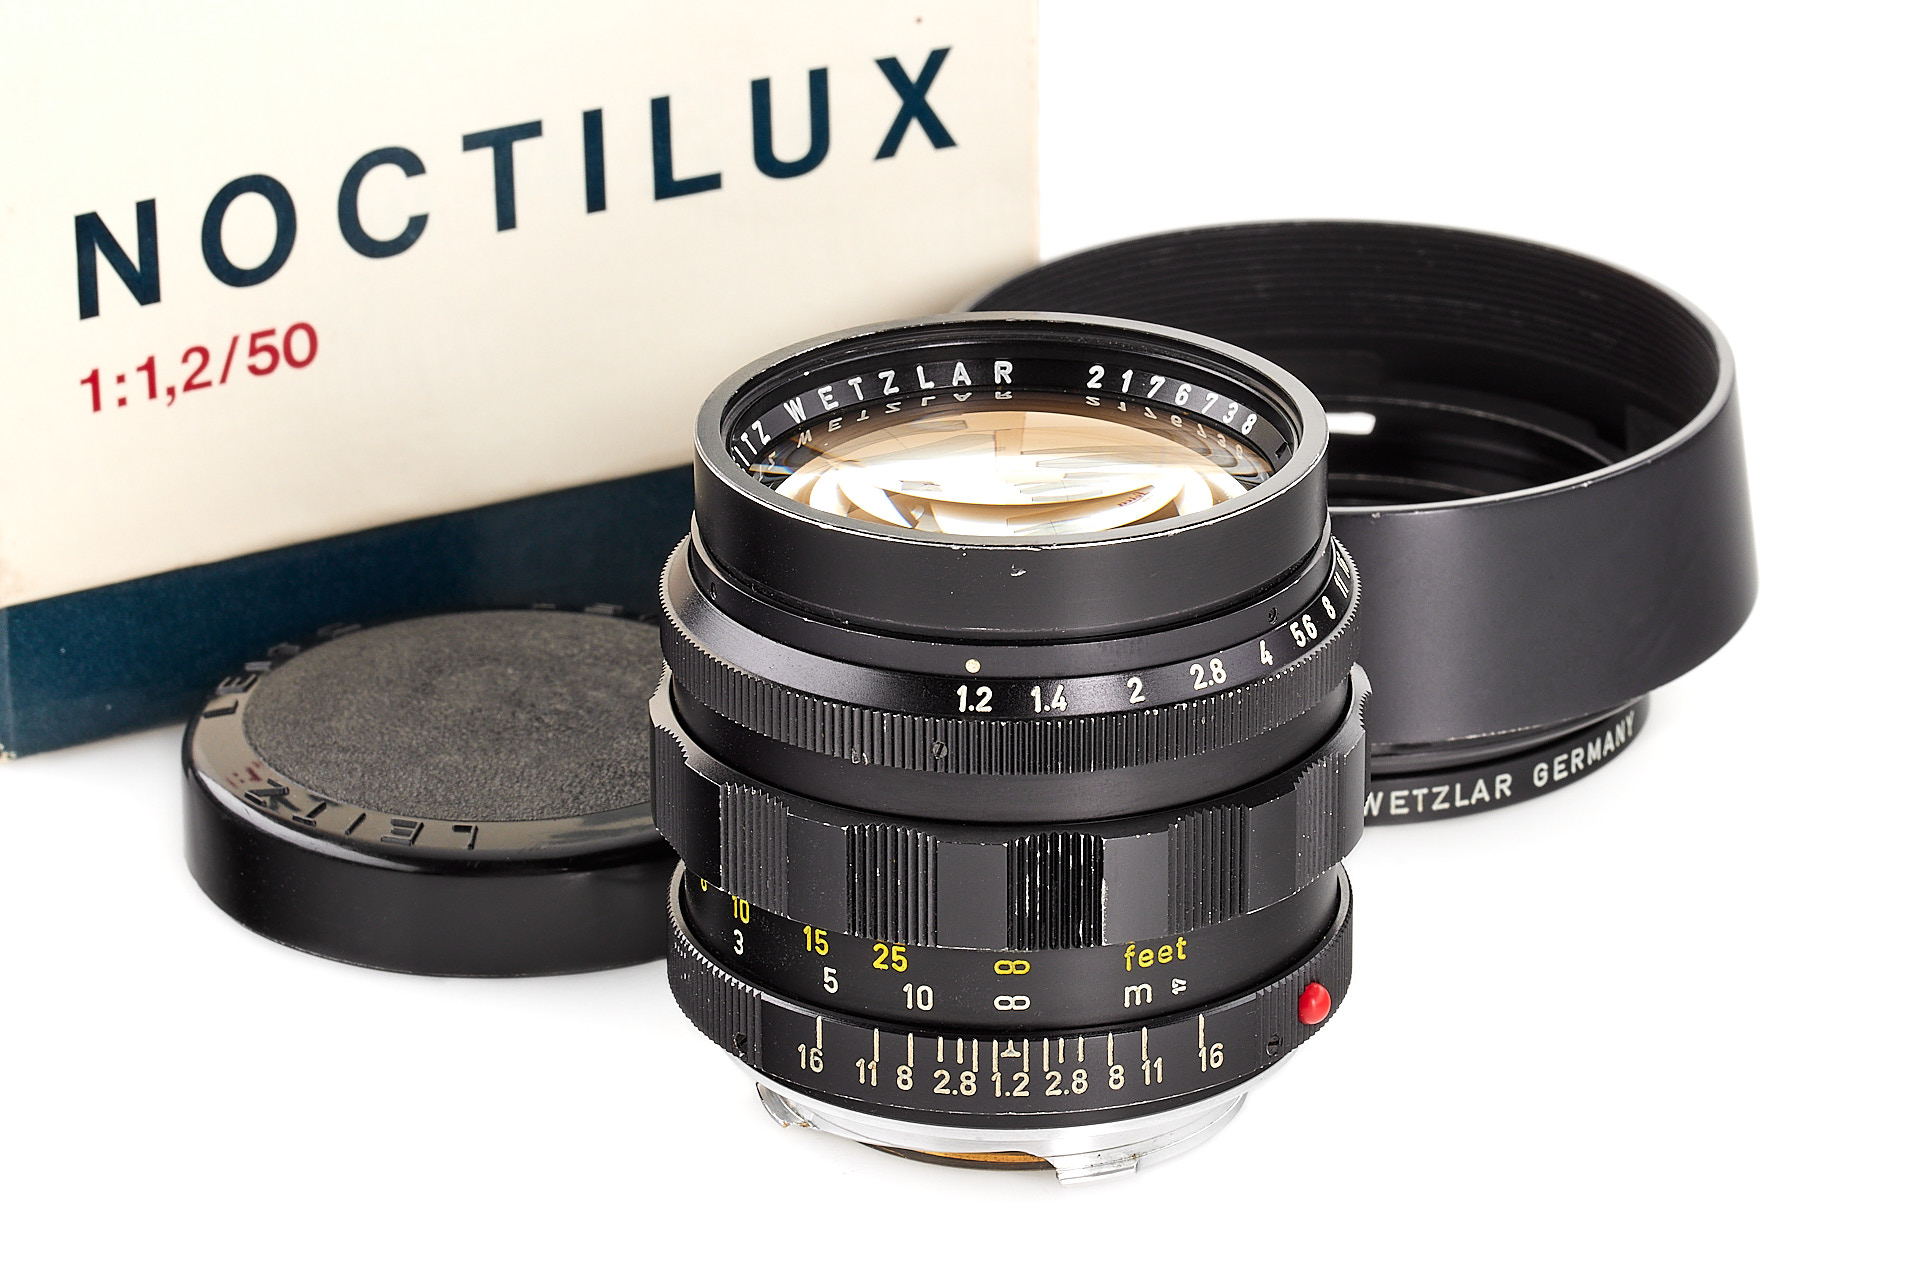 Noctilux 1.2/50mm 'Photokina'